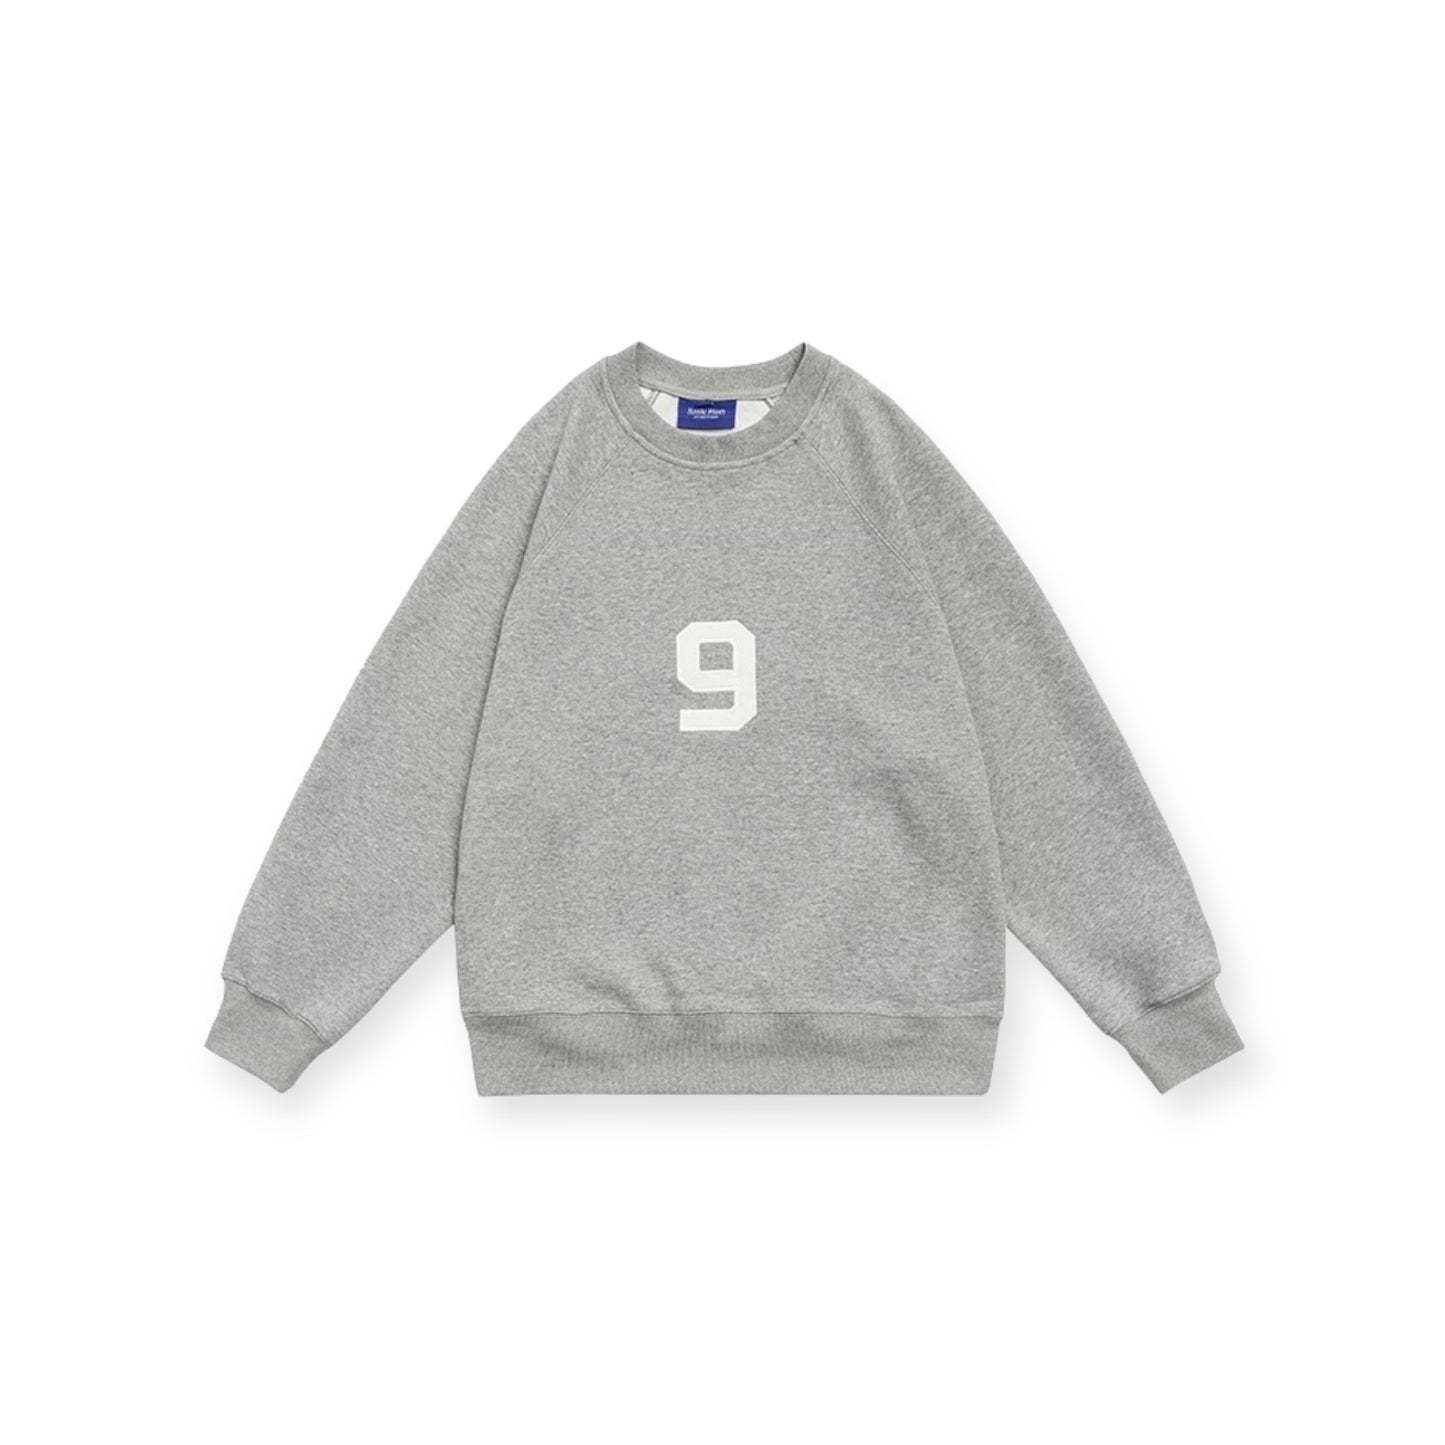 Basic Plan Number 9 Embroid Oversize Sweatshirt